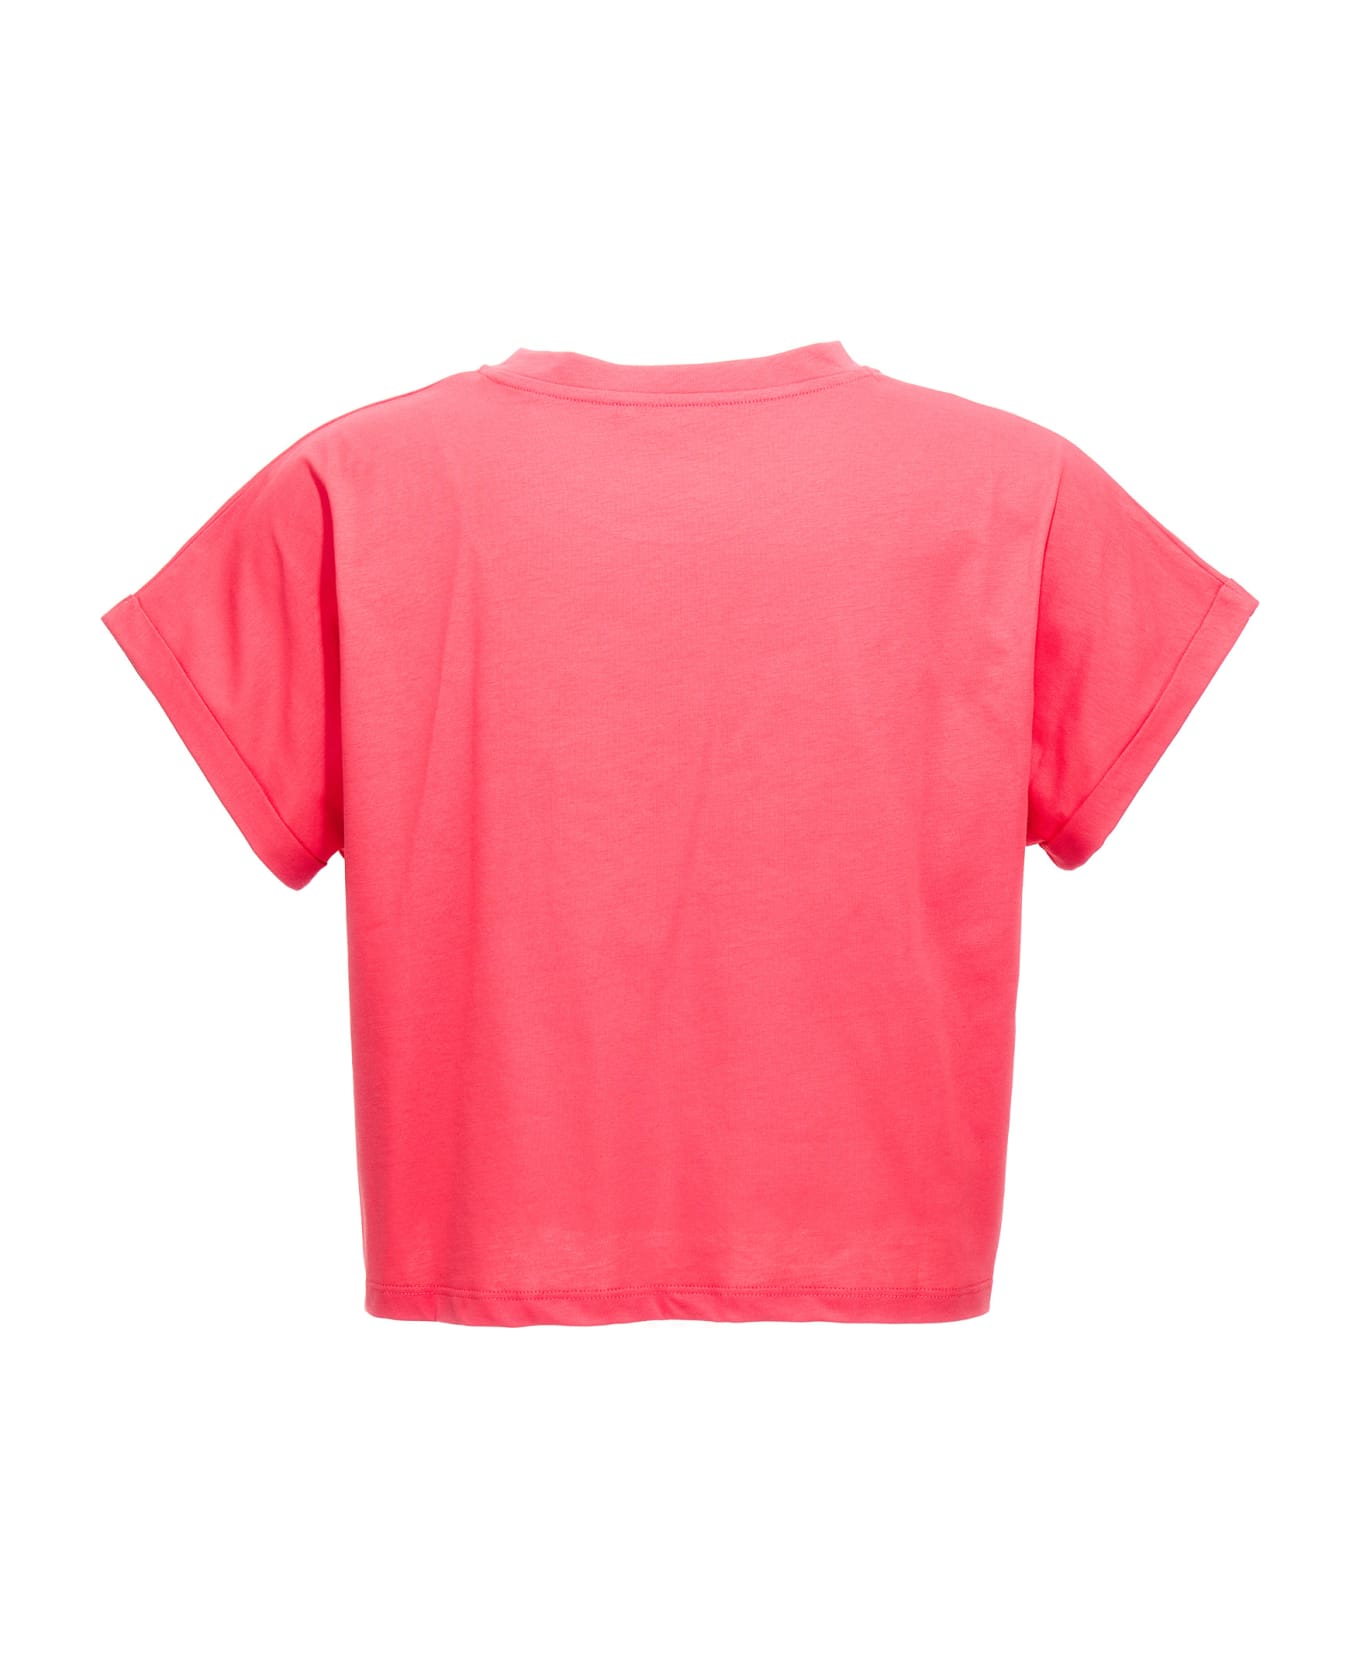 Balmain Logo Crop T-shirt - Fuchsia